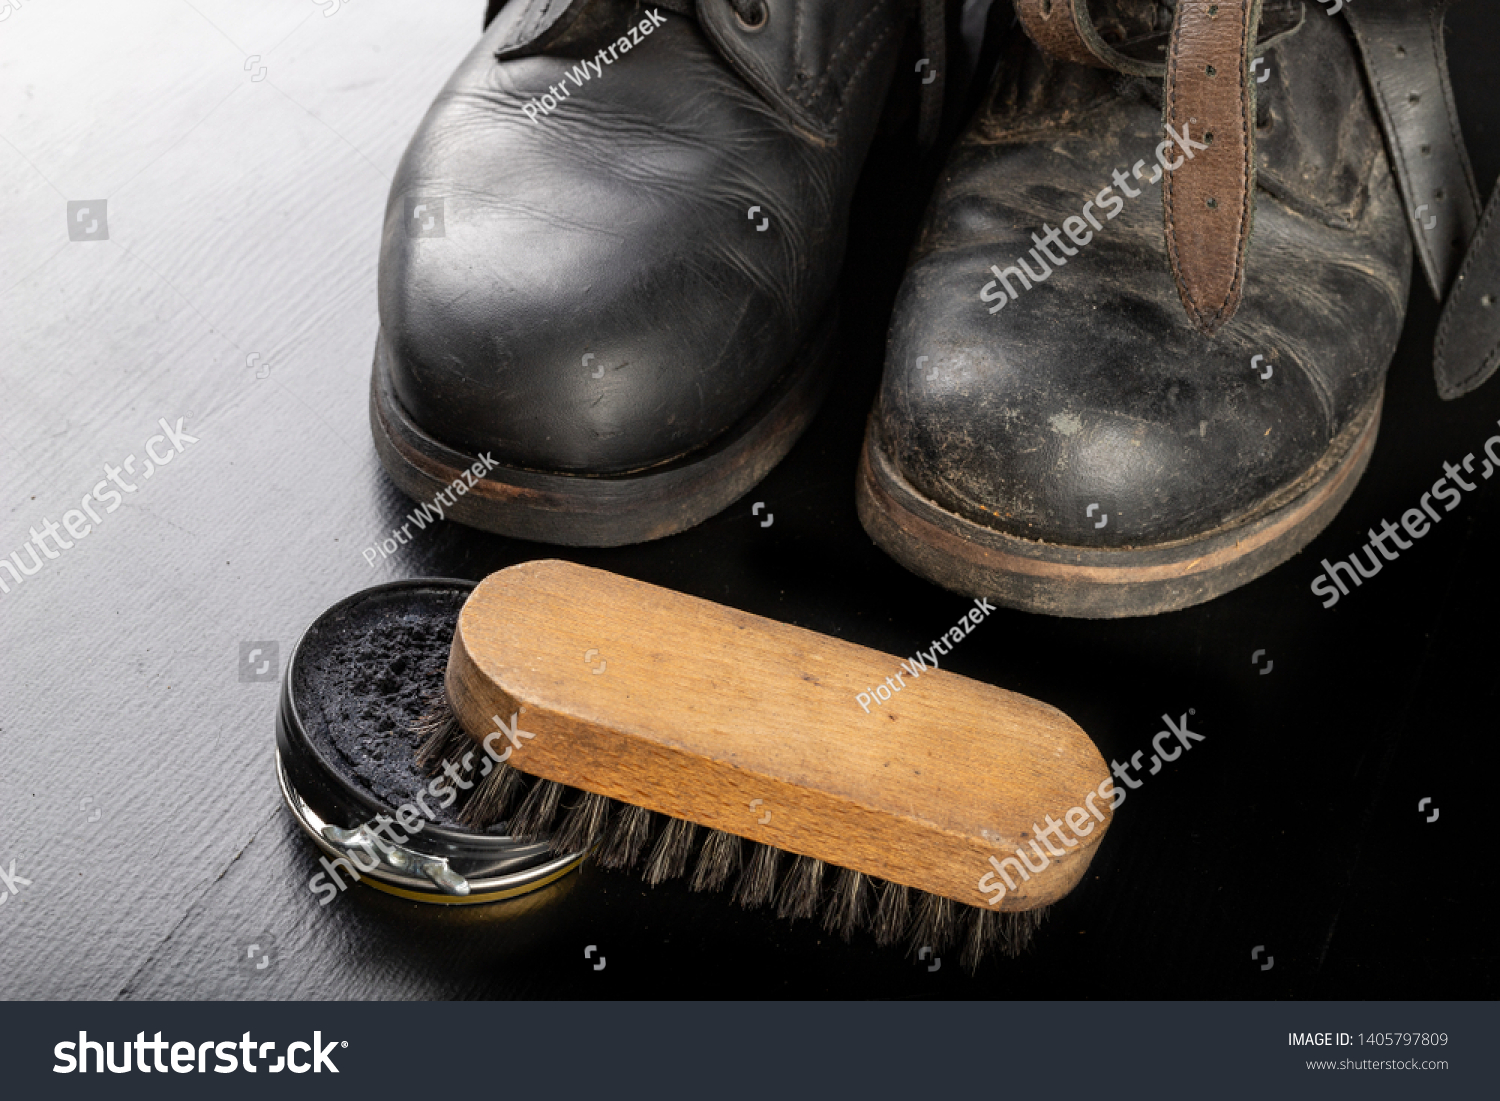 polishing black boots